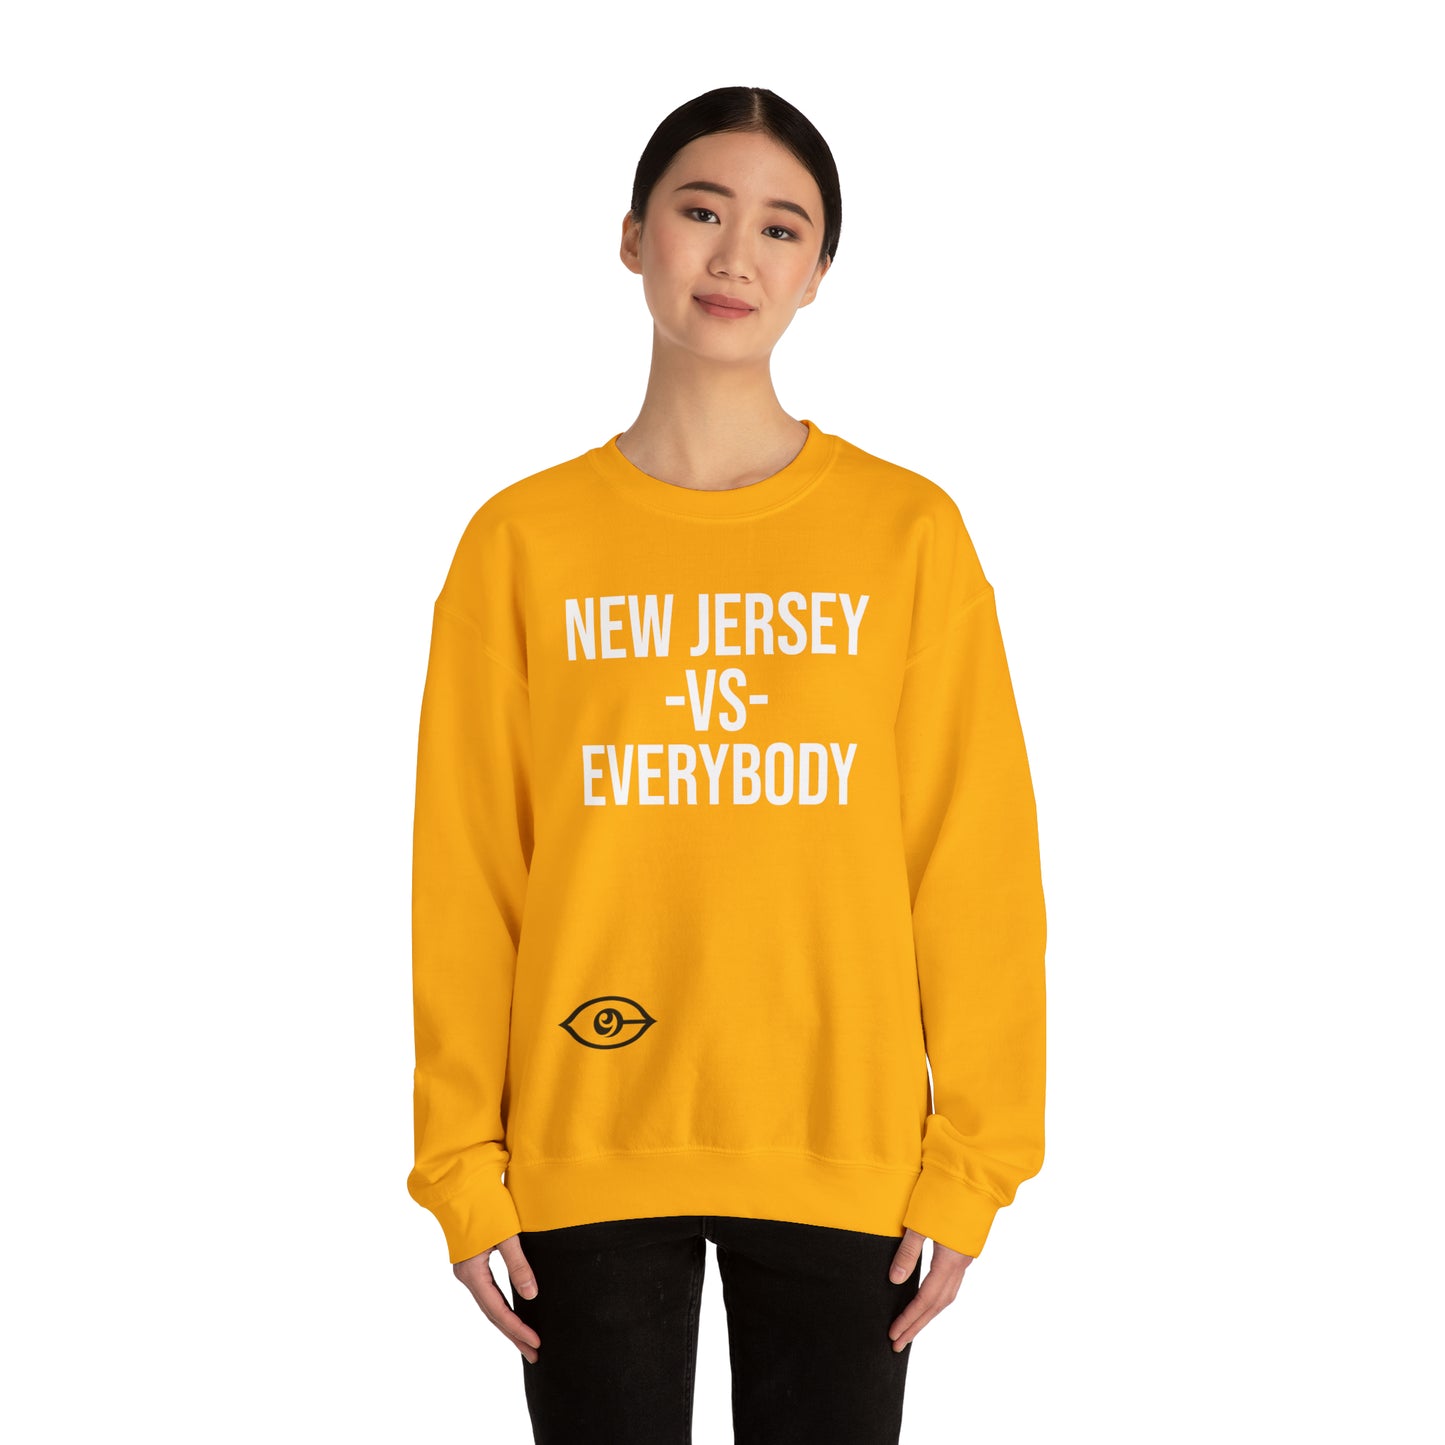 New Jersey - VS - Everybody Unisex Heavy Blend™ Crewneck Sweatshirt